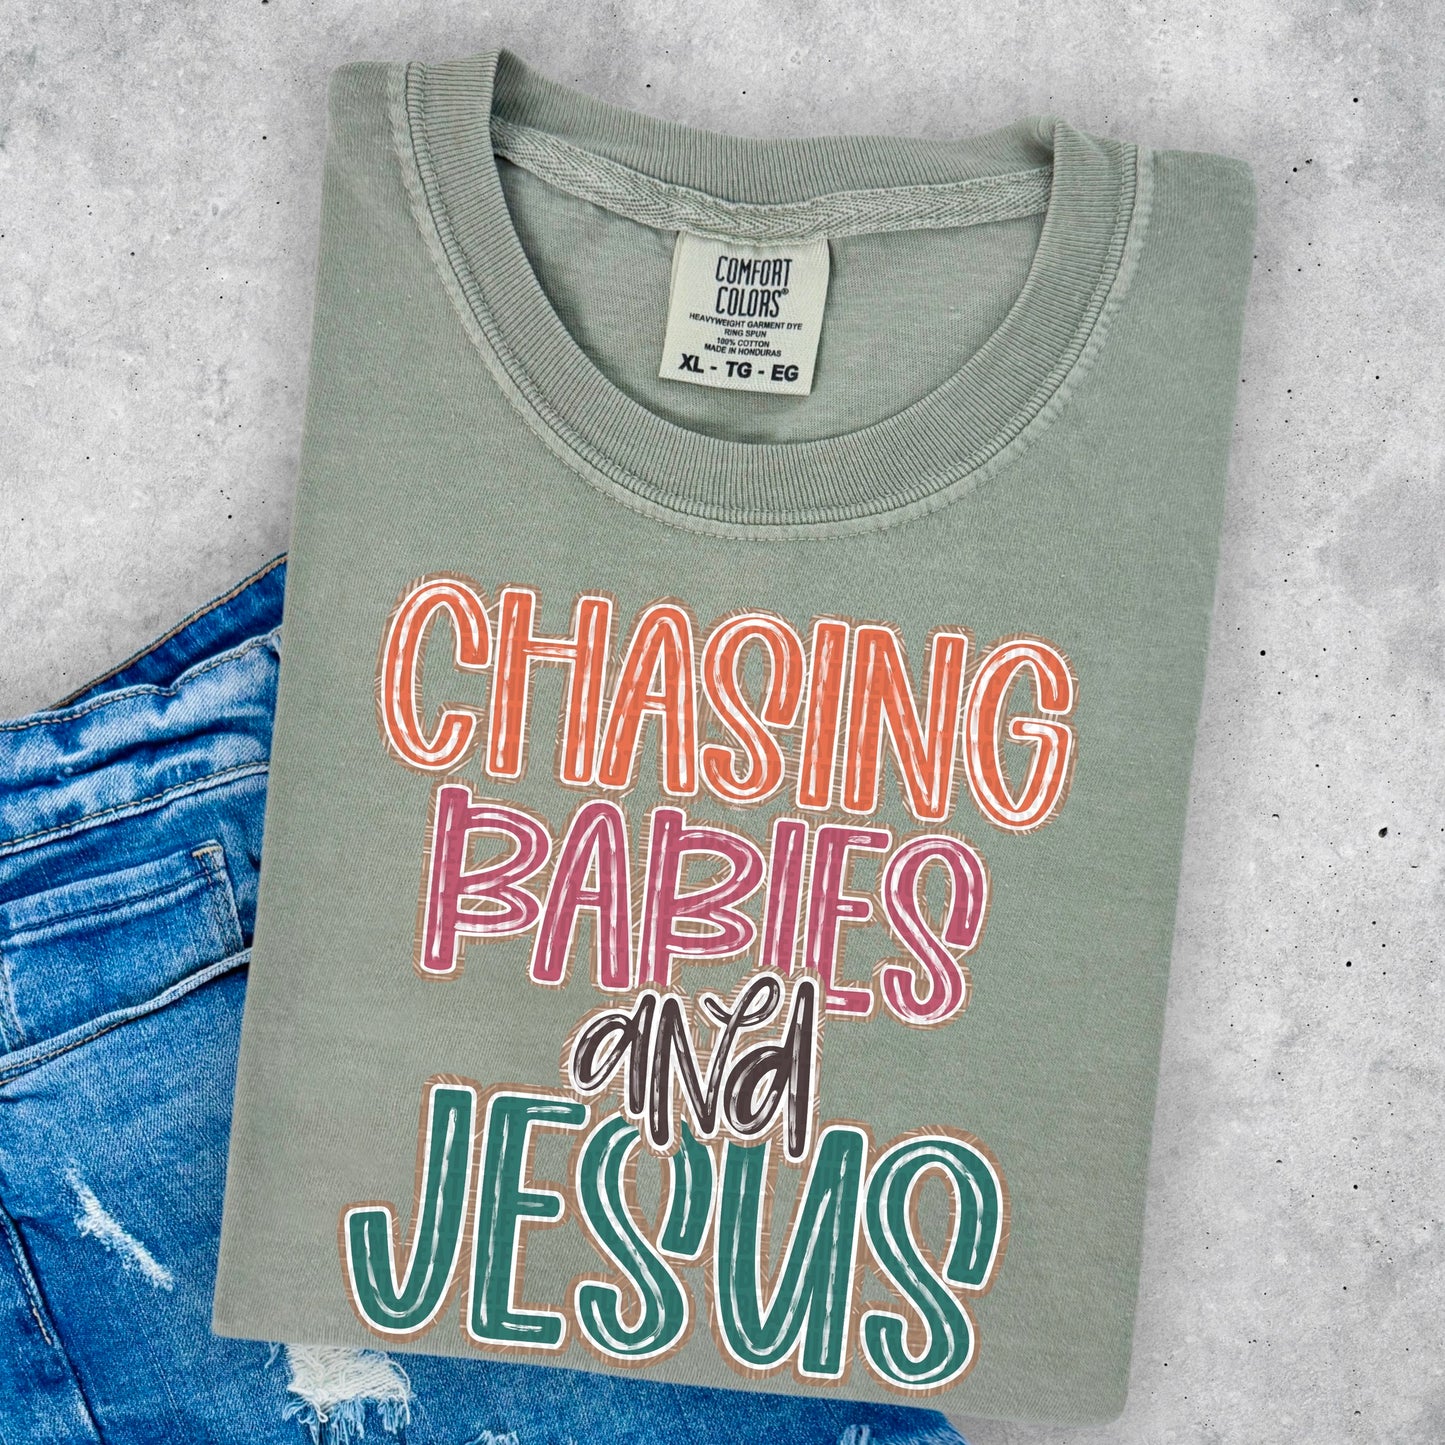 Chasing Babies & Jesus - Tee